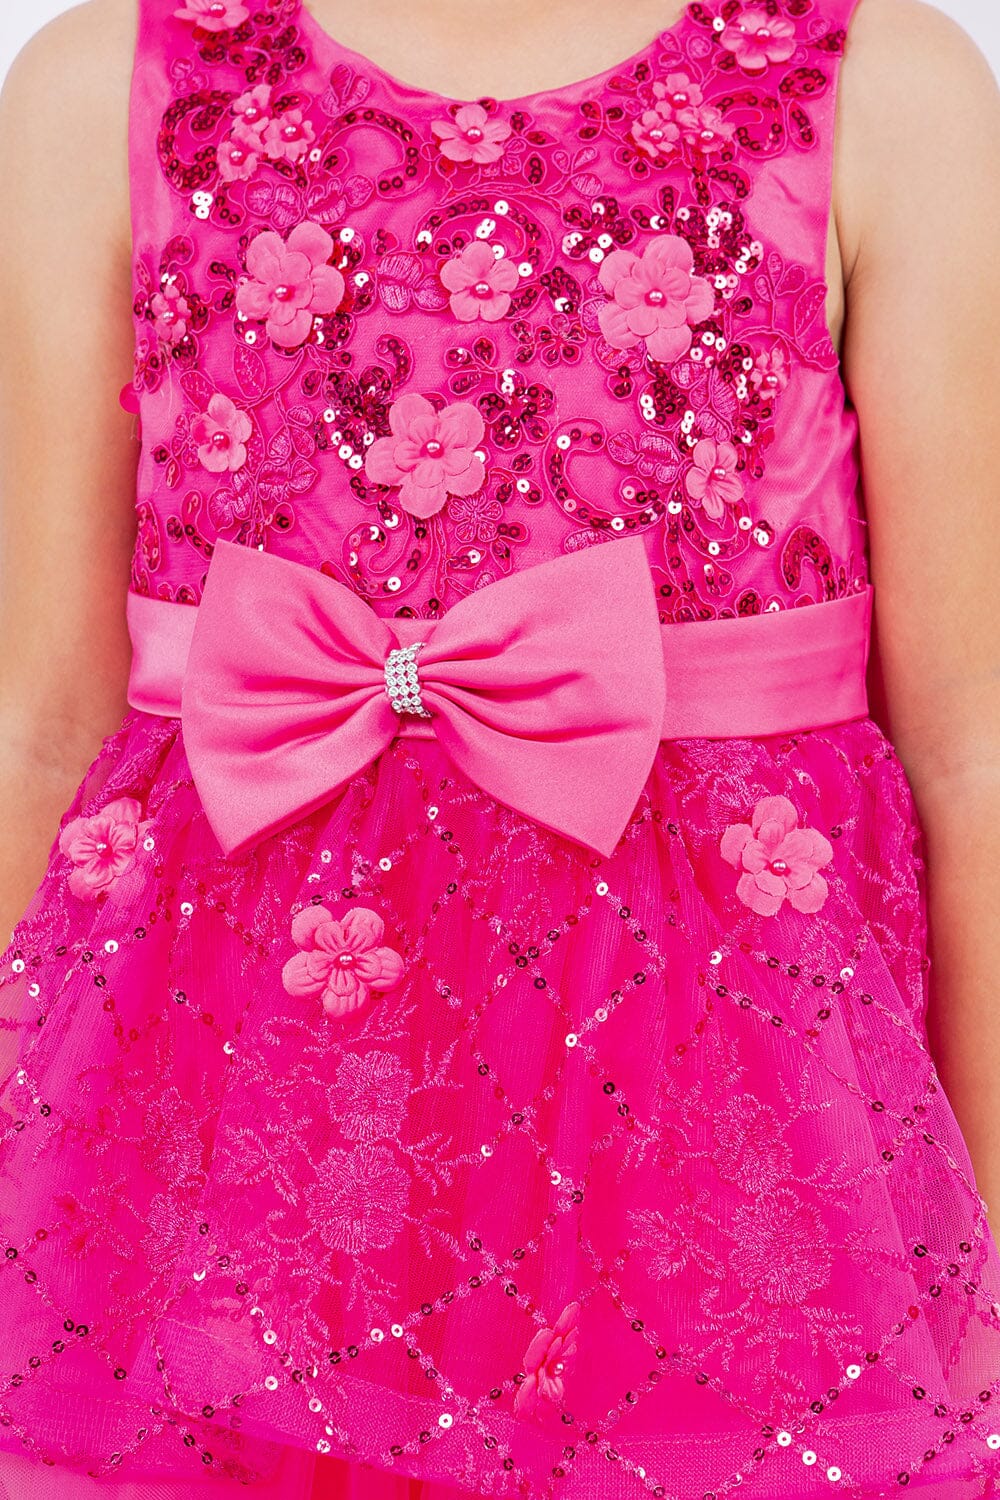 Girls Short Sequin Applique Dress by Cinderella Couture 9131